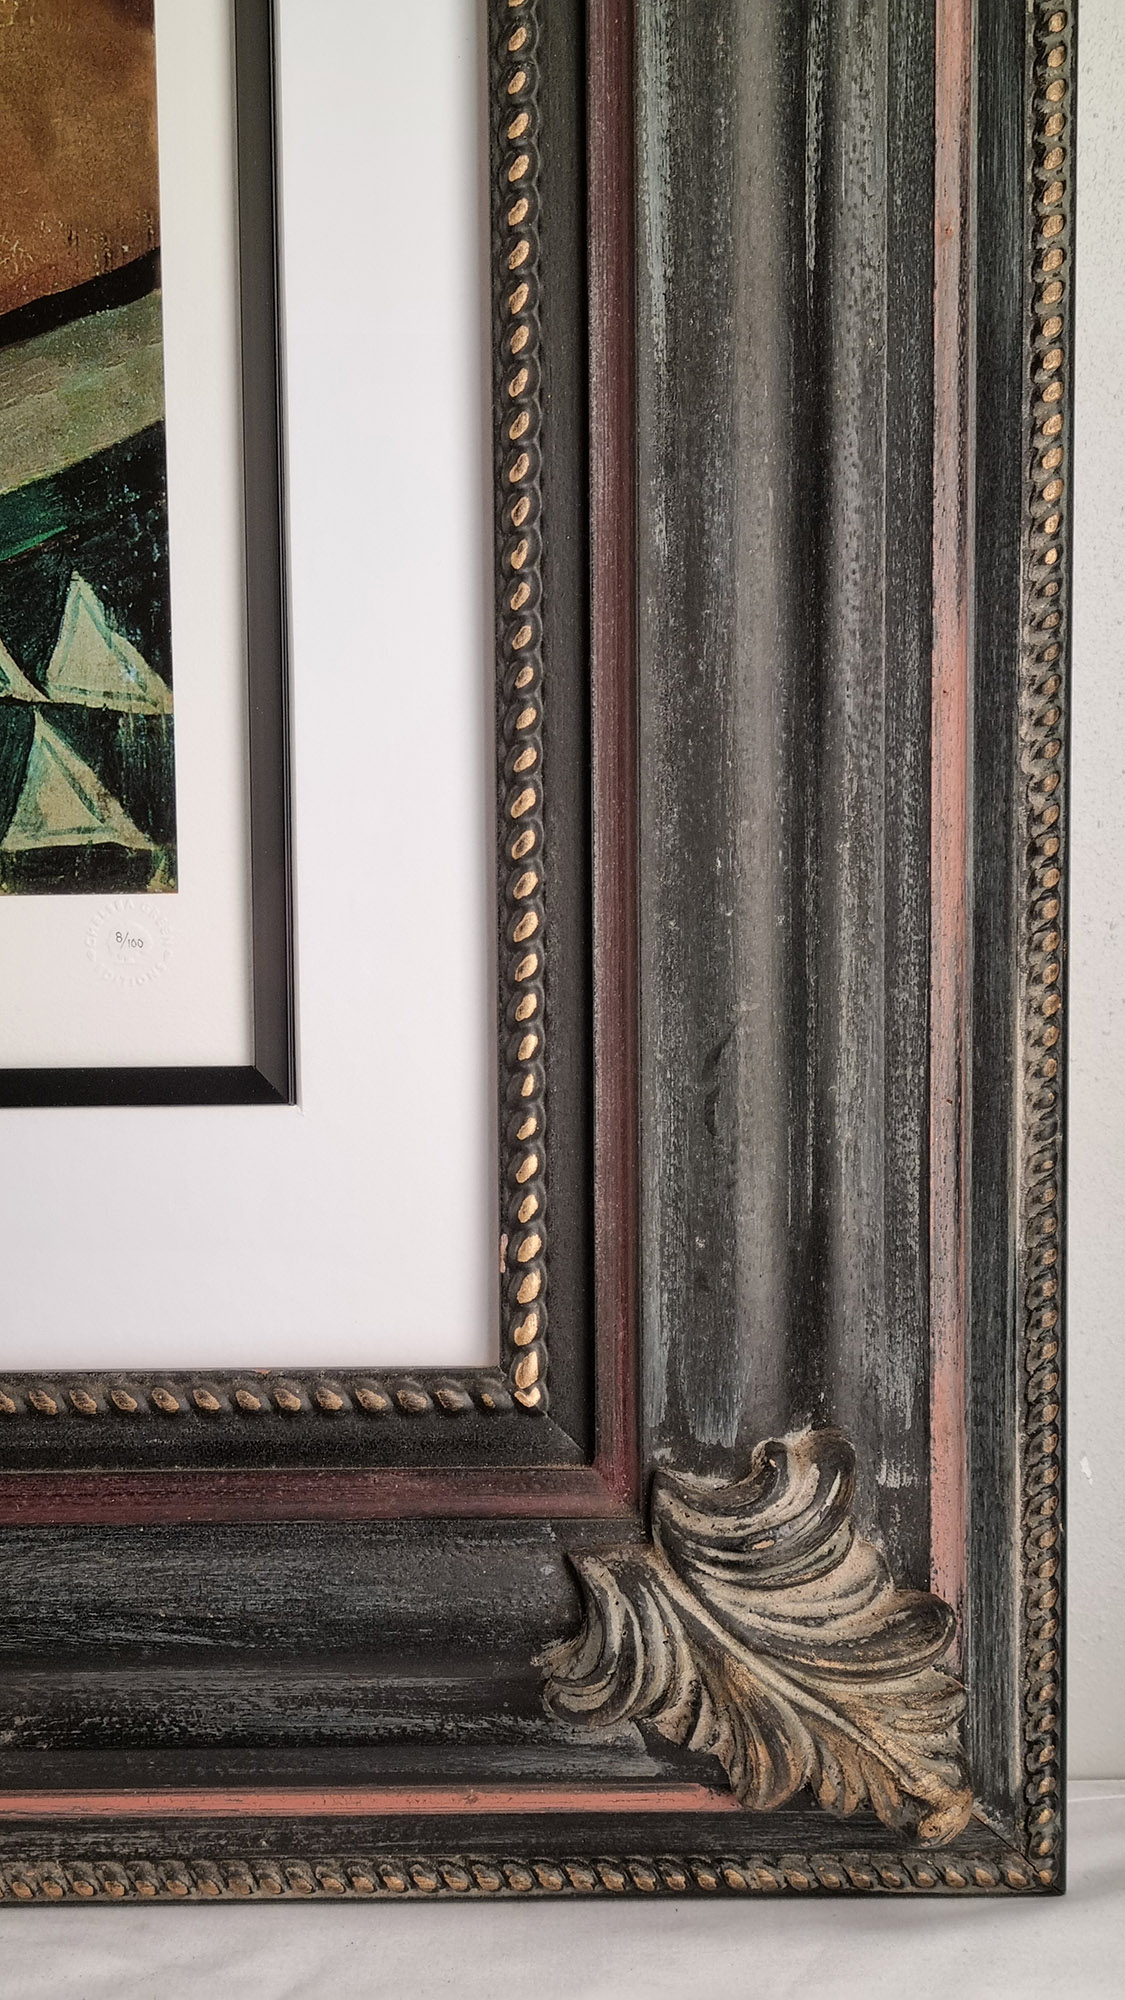 Tamara de Lempicka """"The Green Turban"""" with Lempicka Estate (New York) - Image 8 of 8